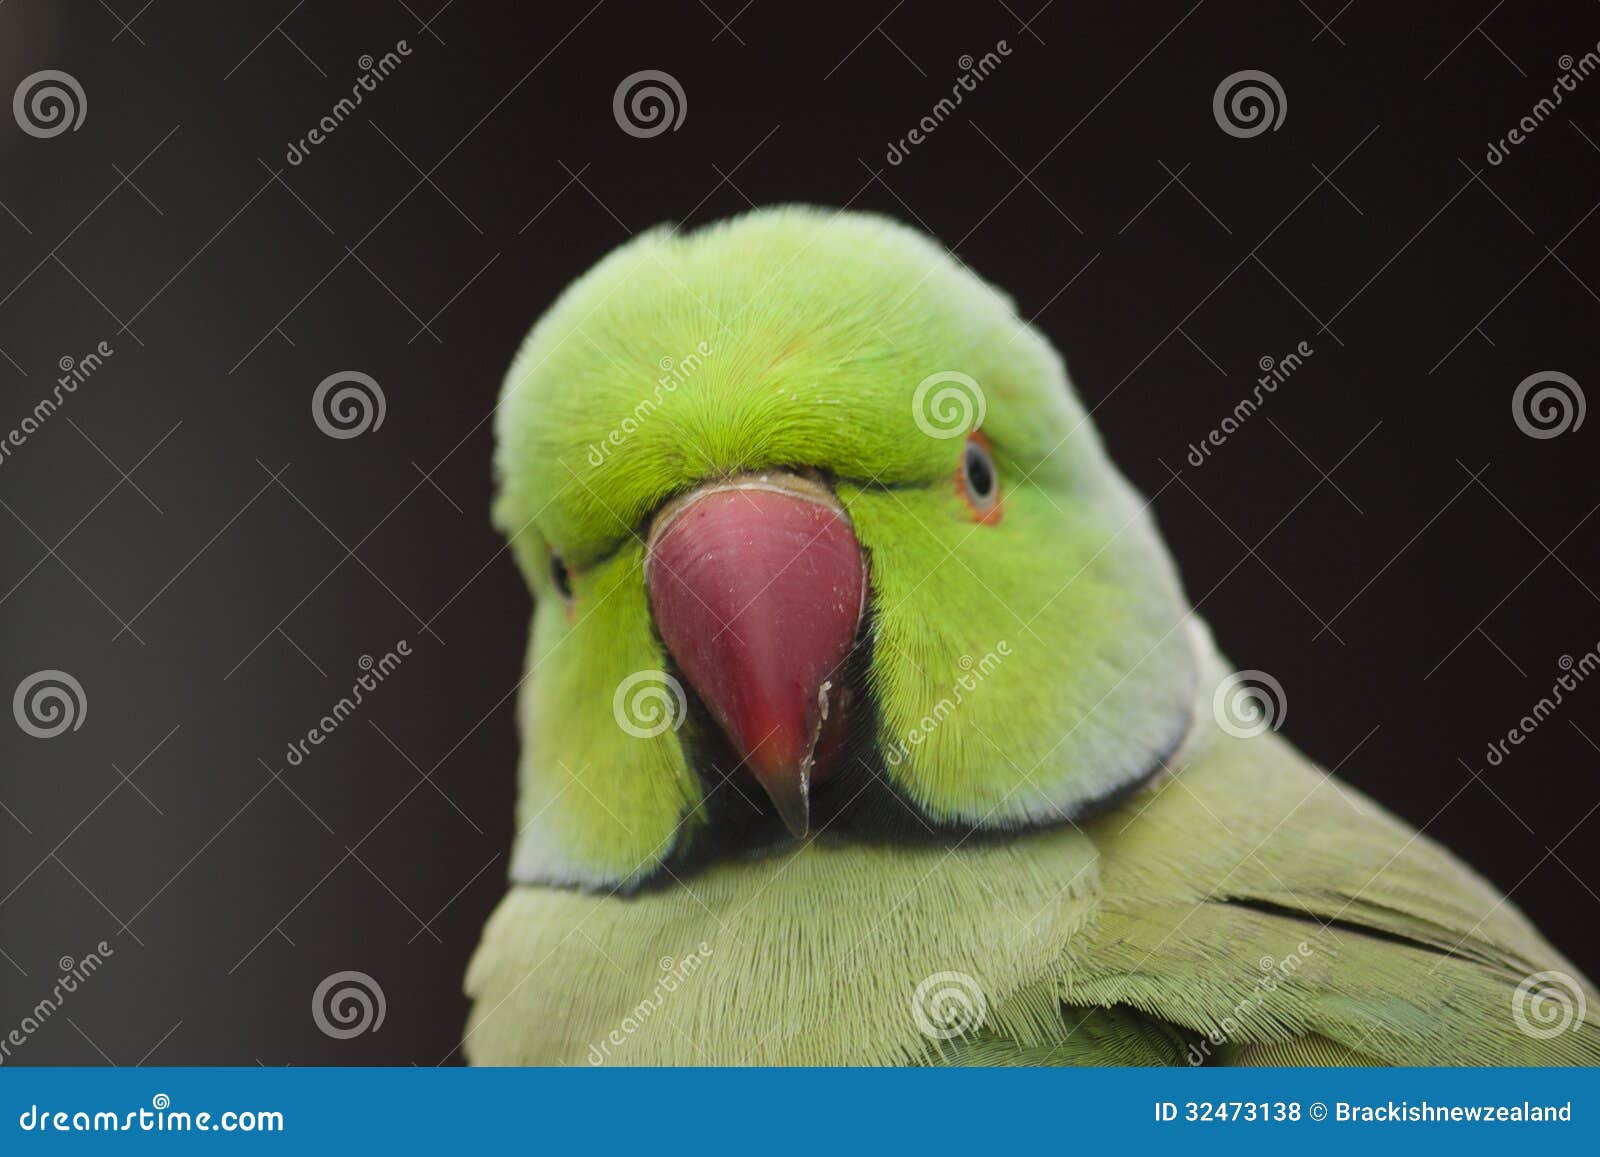 ringneck parrot green ring necked red beak 32473138